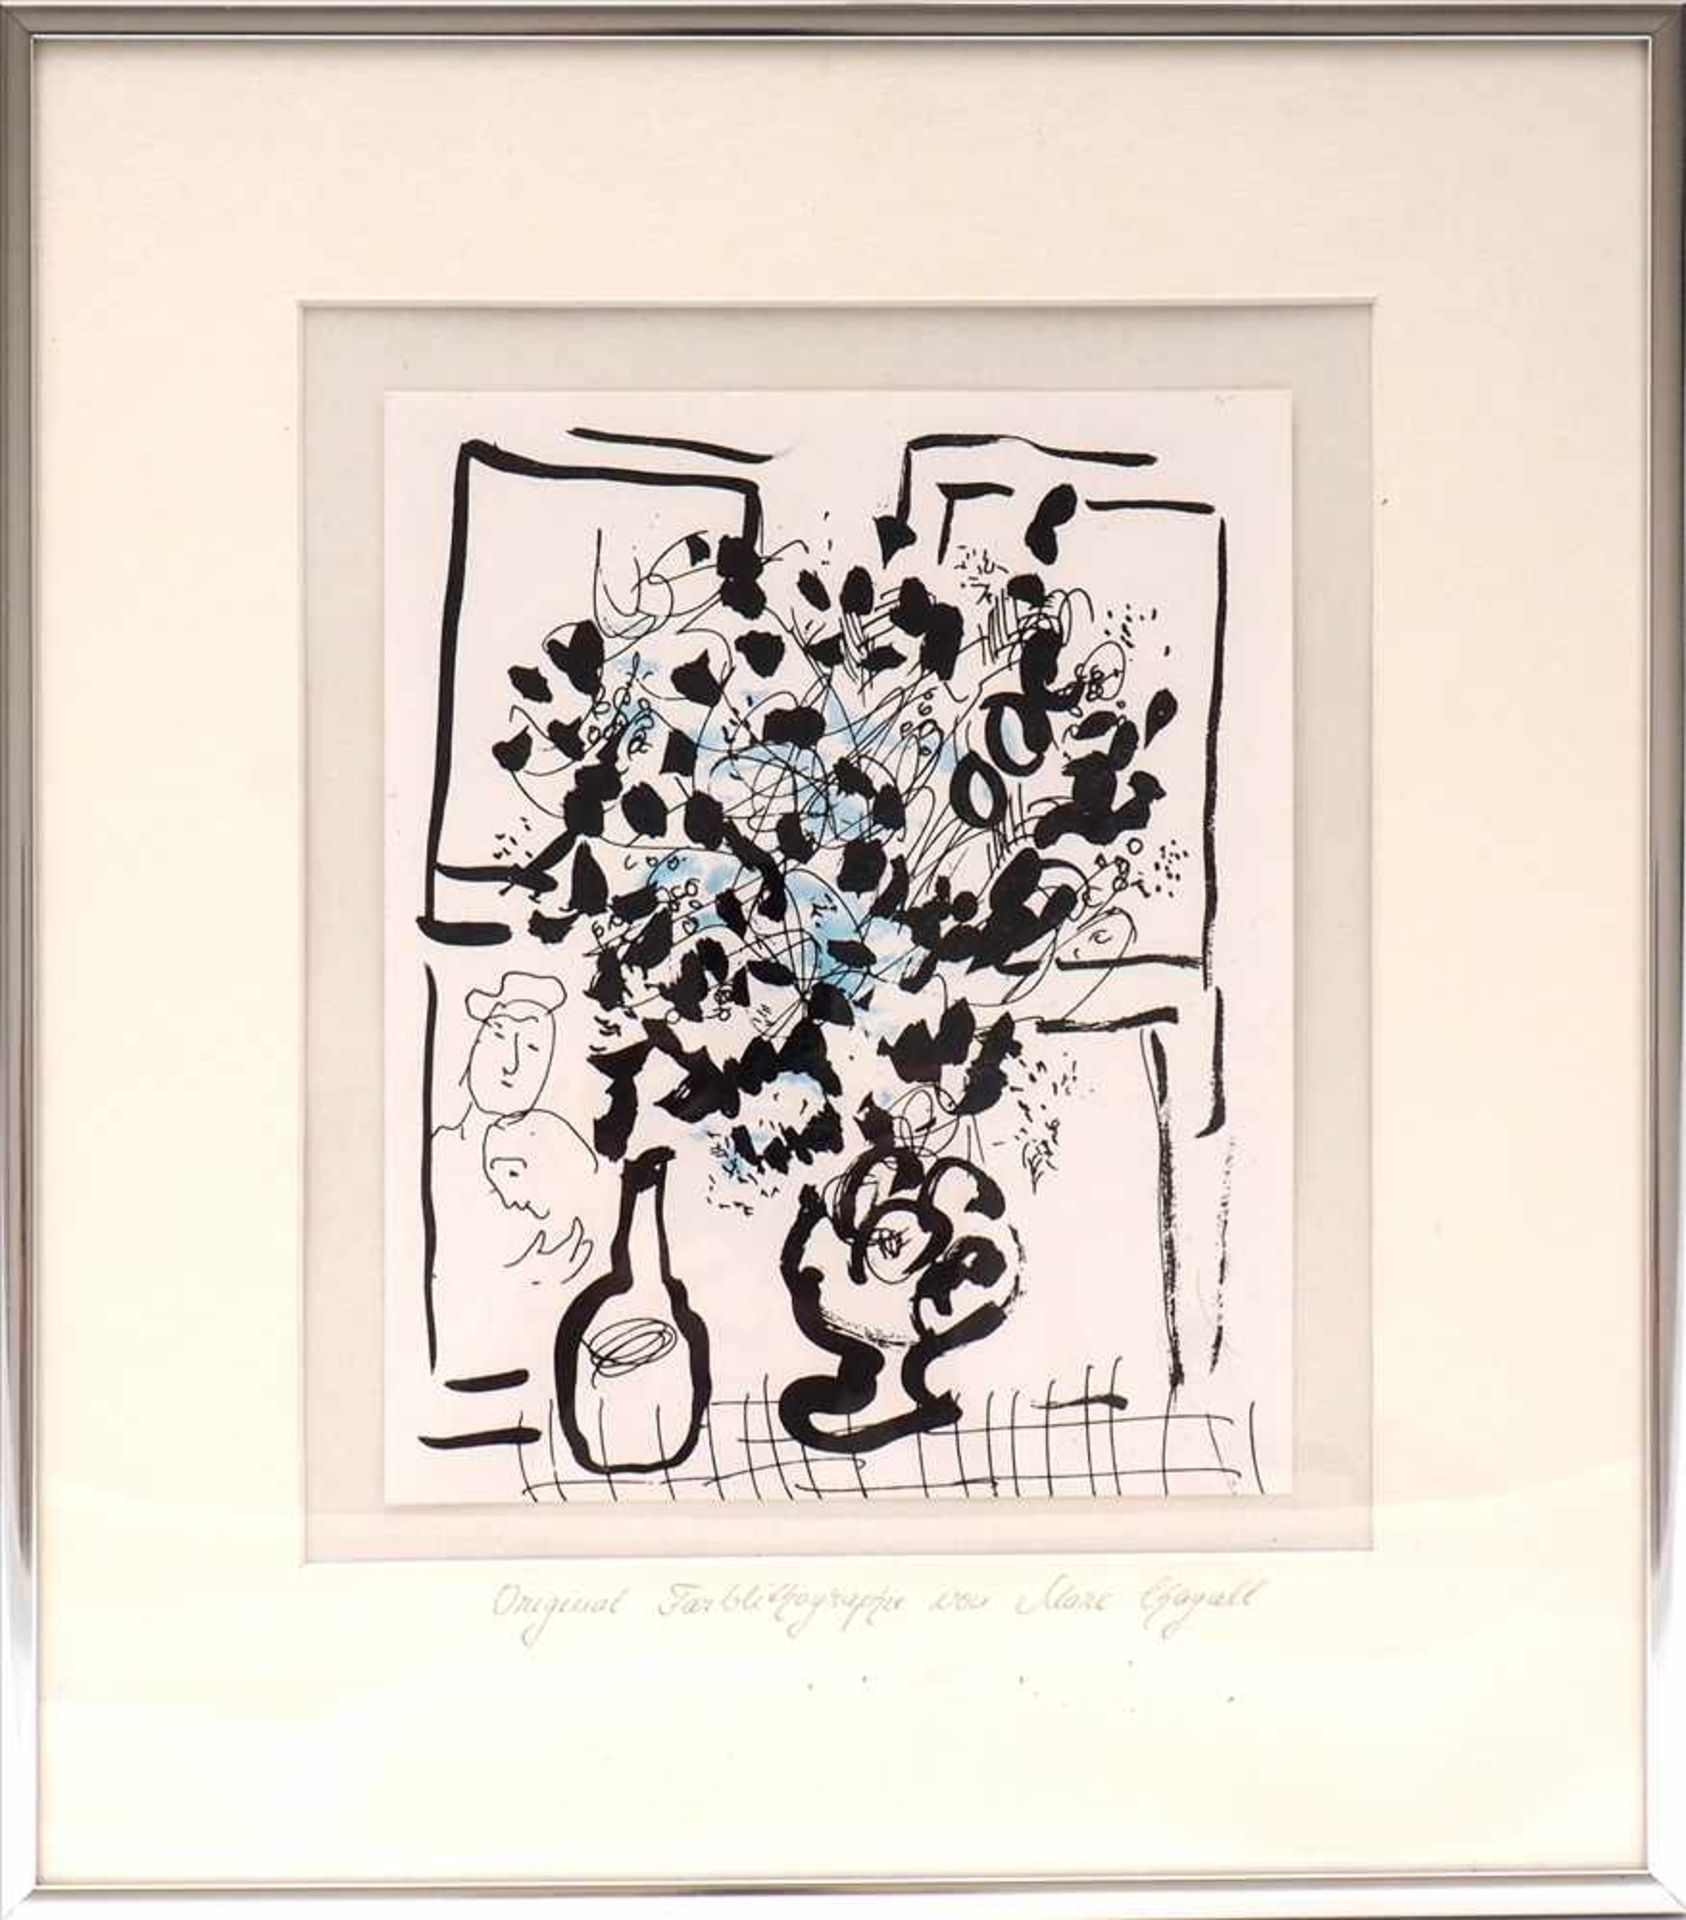 Chagall, Marc1887 Witebsk - 1985 Saint-Paul-de-Vence, nach. Farblithographie. Nach Nature morte - Bild 2 aus 4